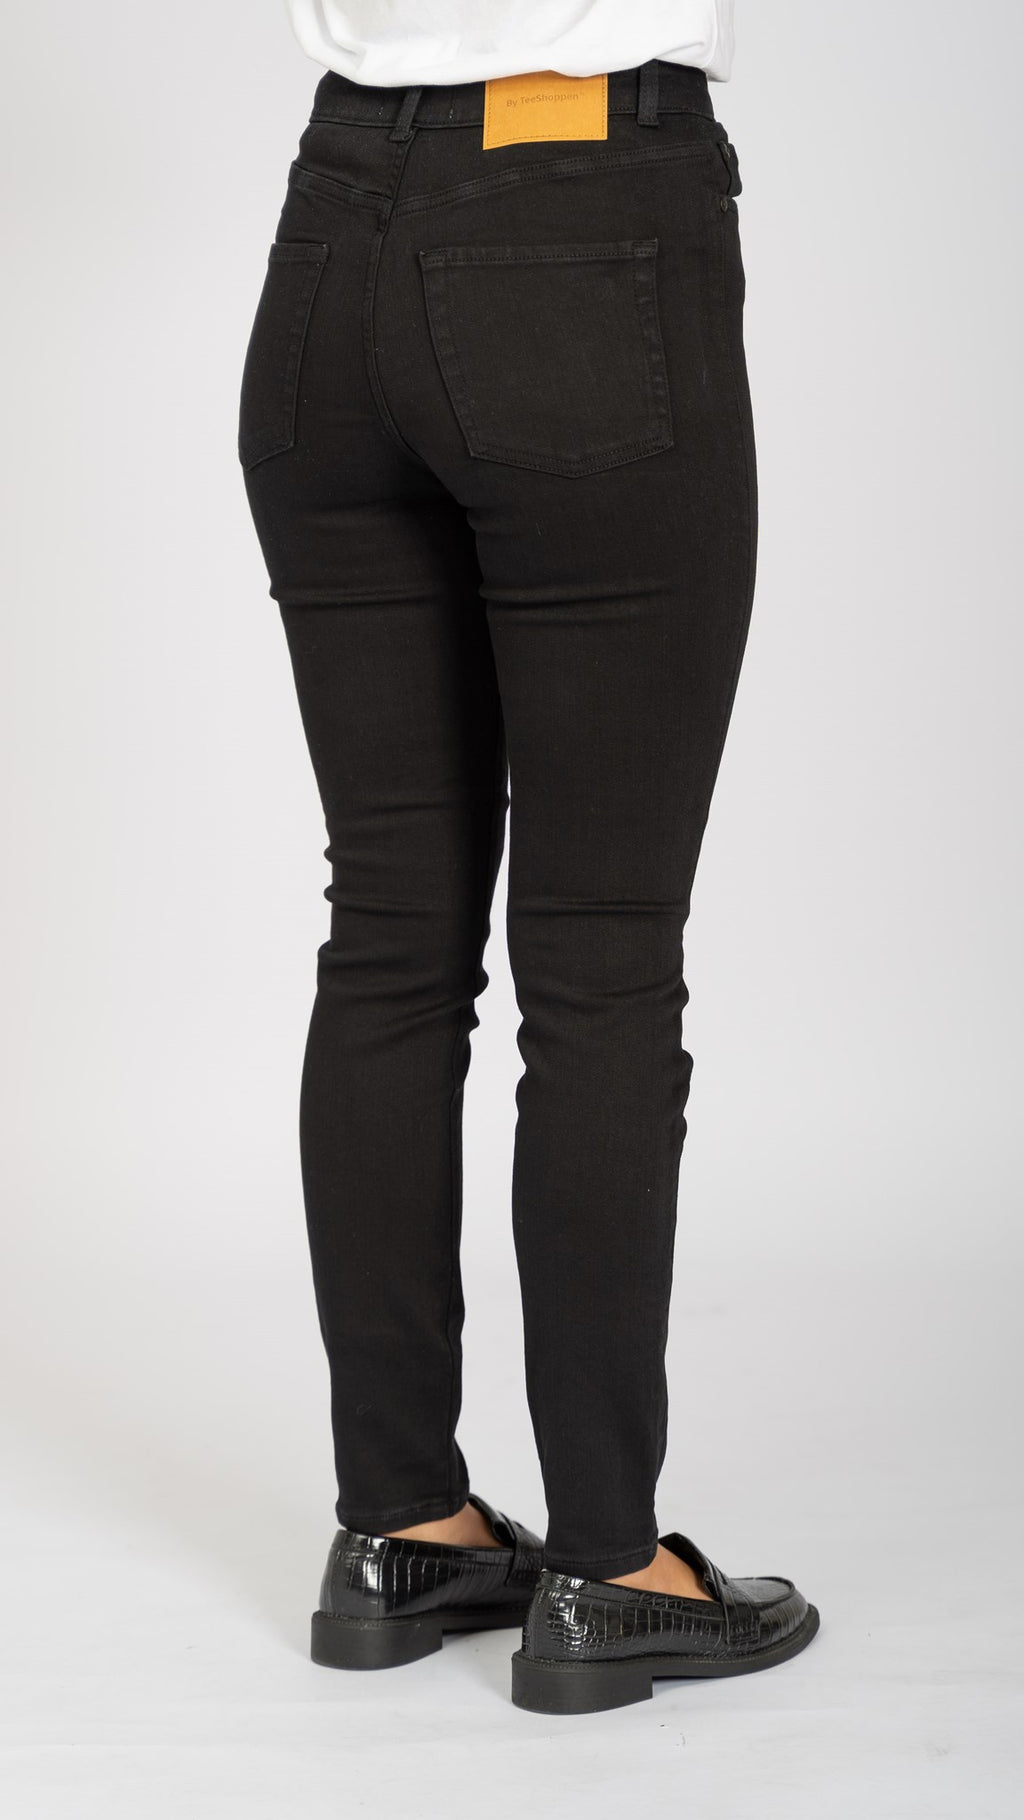 Performance Skinny Jeans - Black Denim